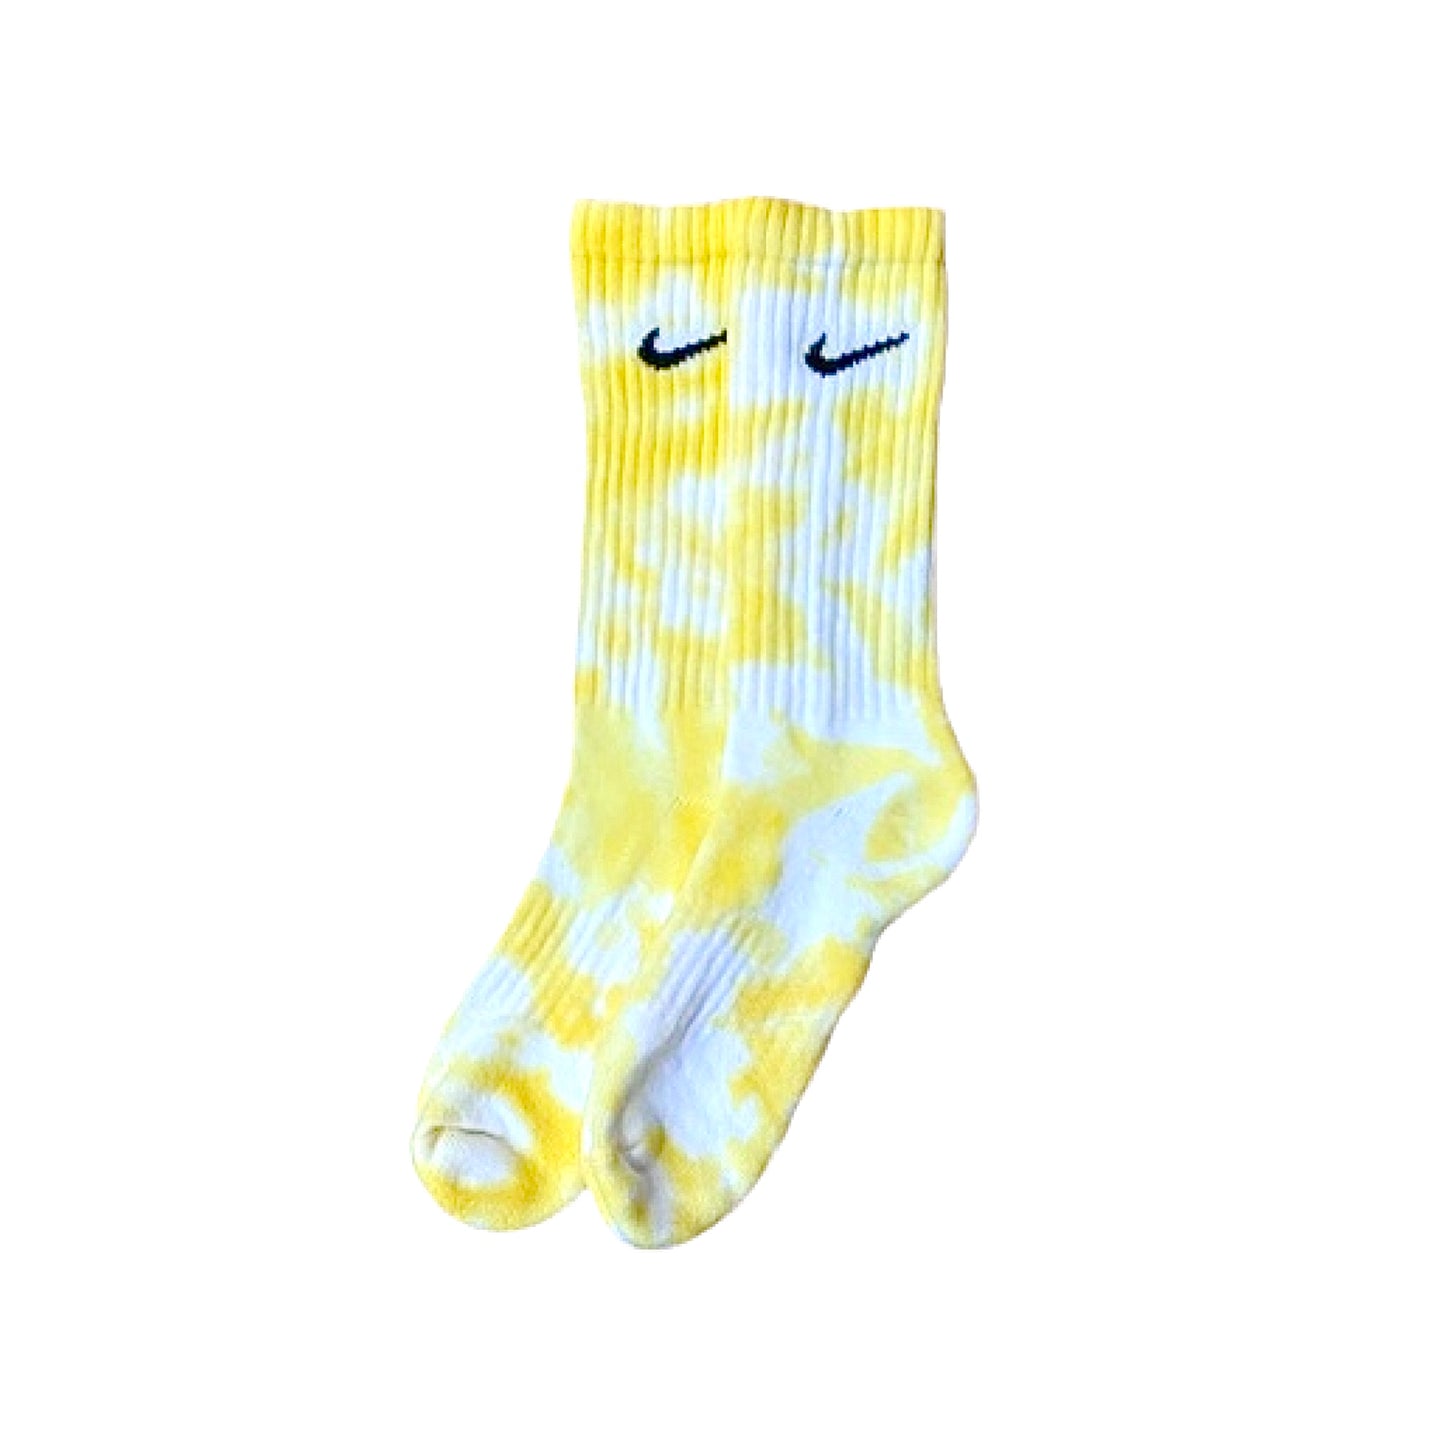 Nike Tie Dye Socks - YELLOW